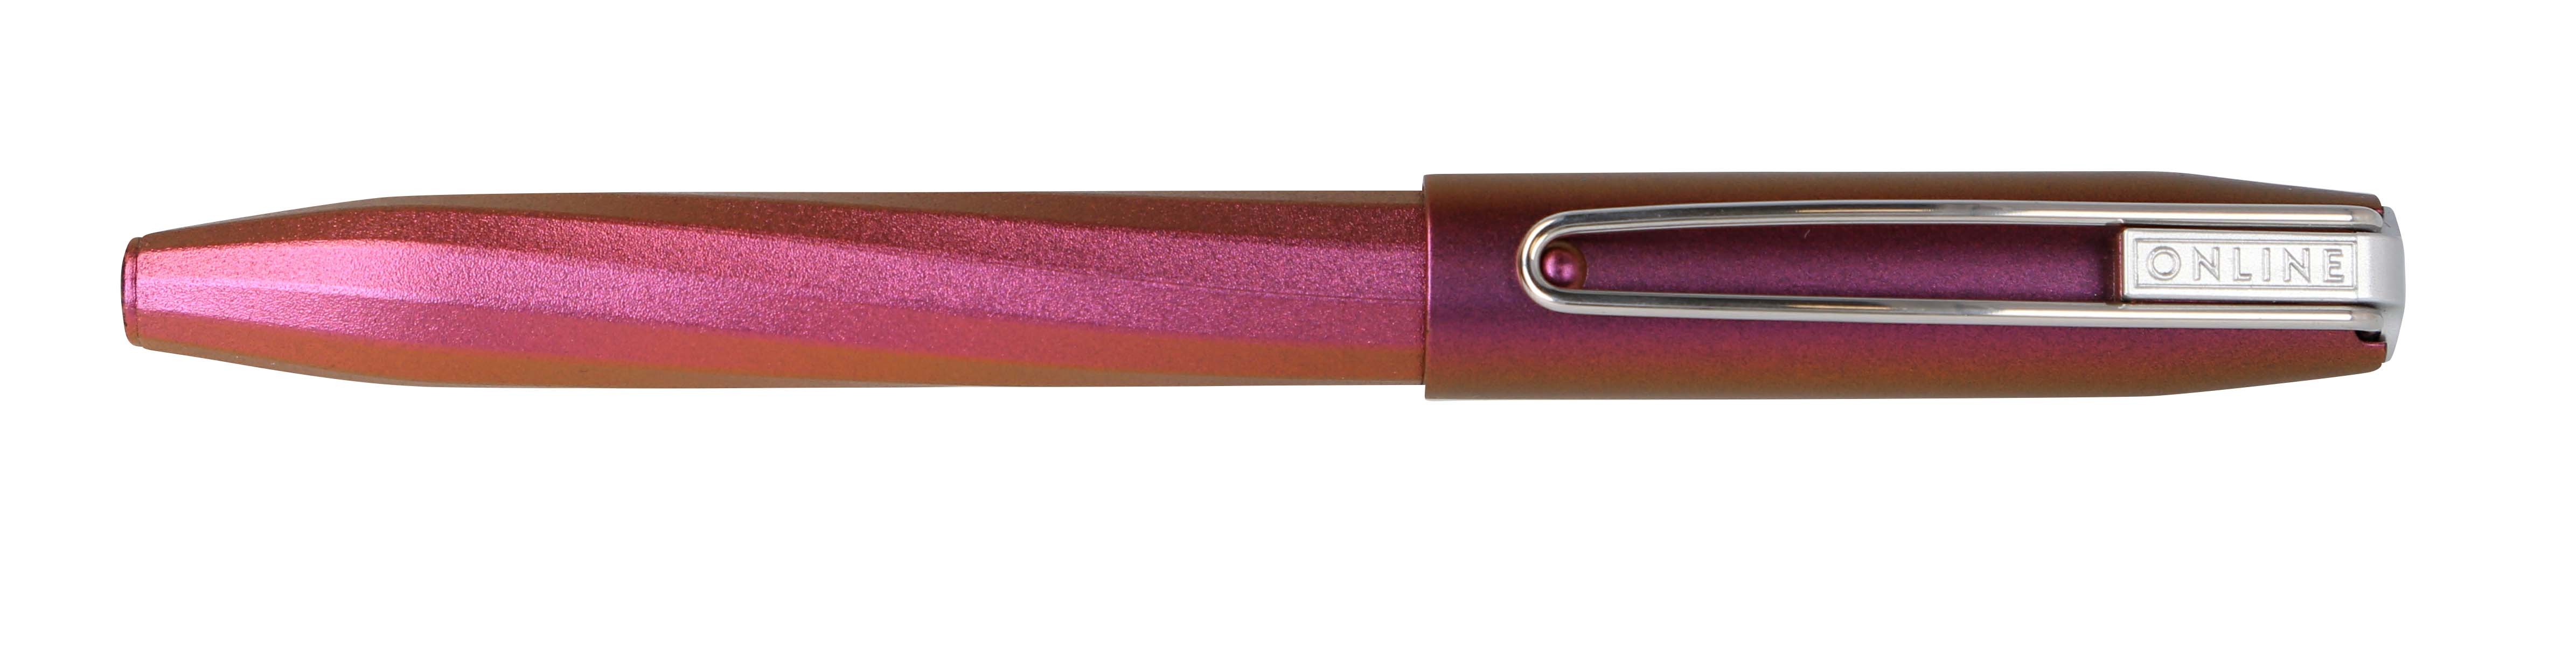 ONLINE Rollerball Slope 26135/3D Metallic Pink